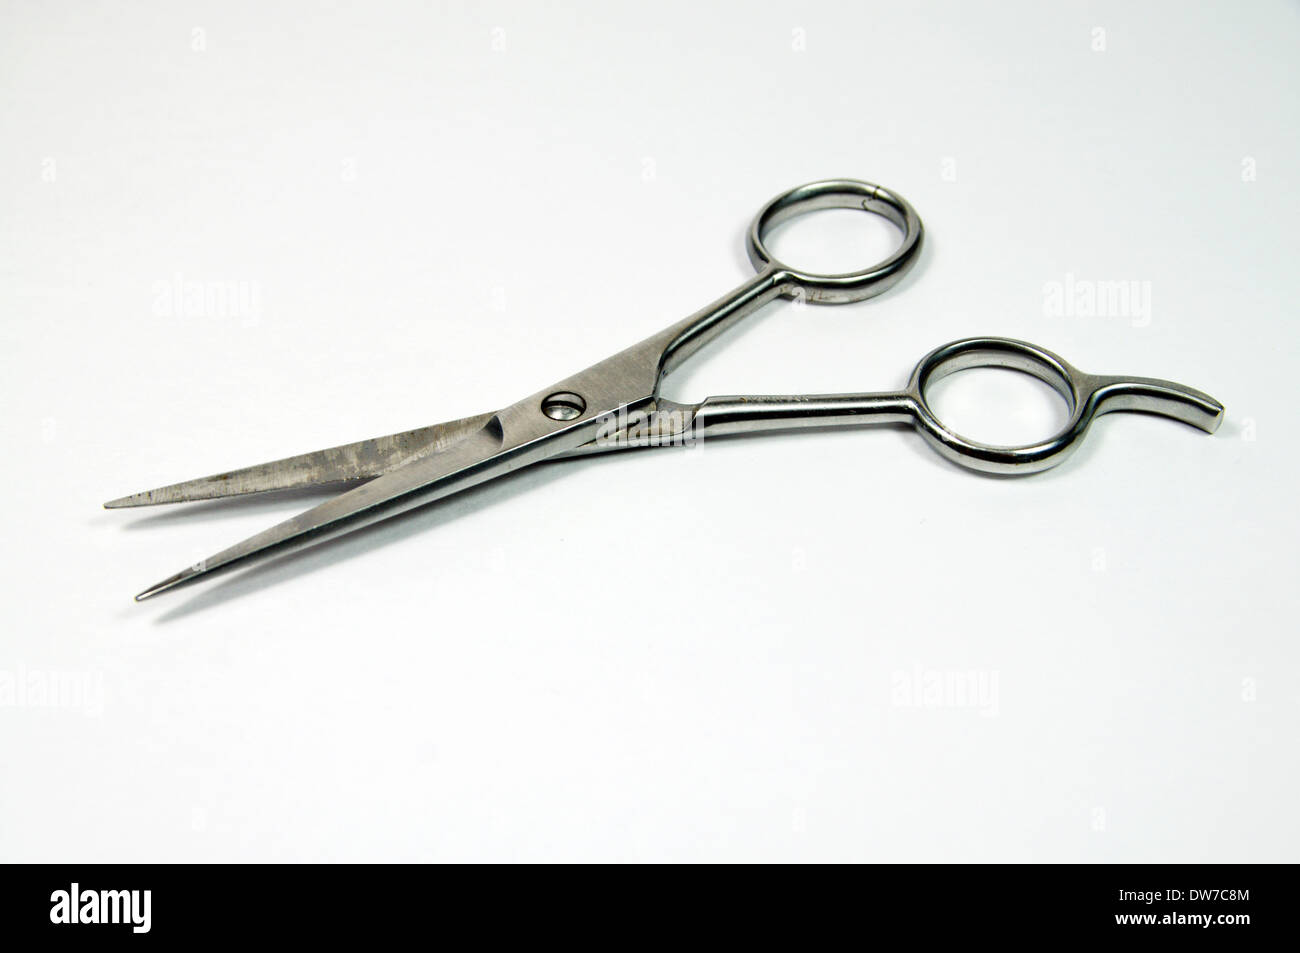 Pair of scissors. Stock Photo